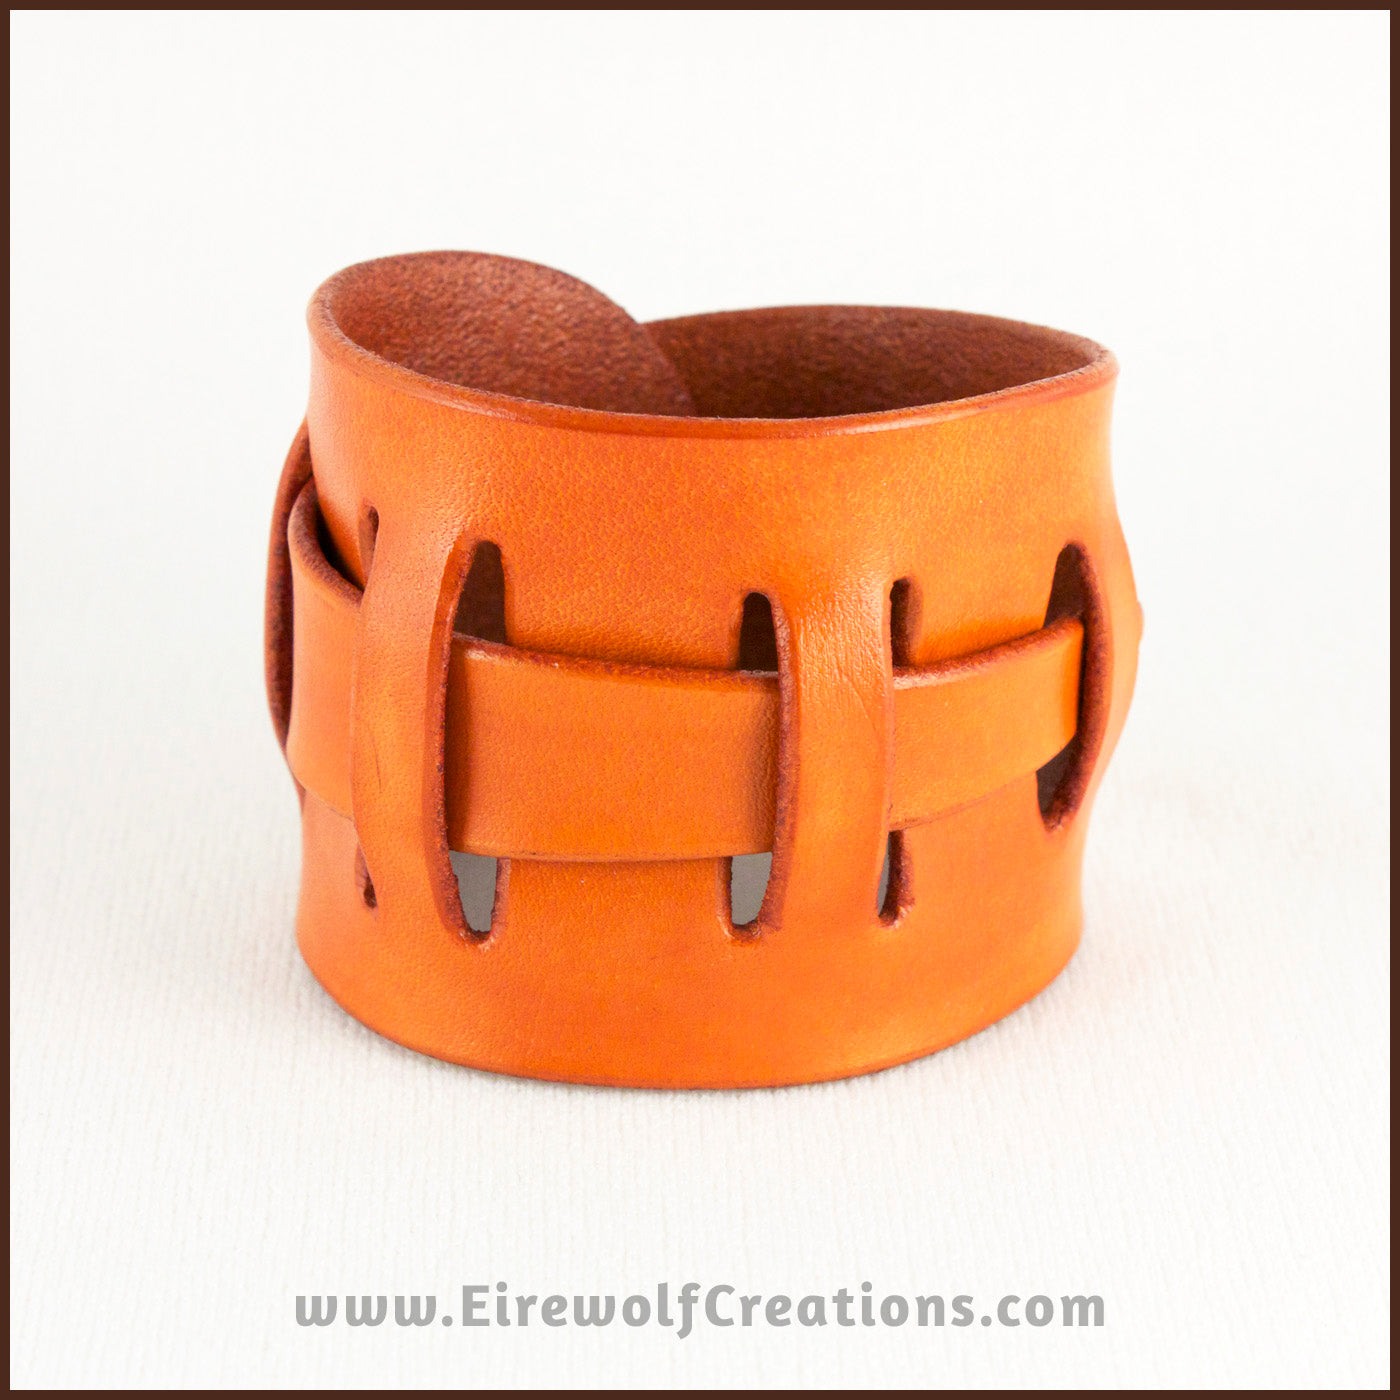 Leather bracelet with Industrial Graduated Holes, handmade, black